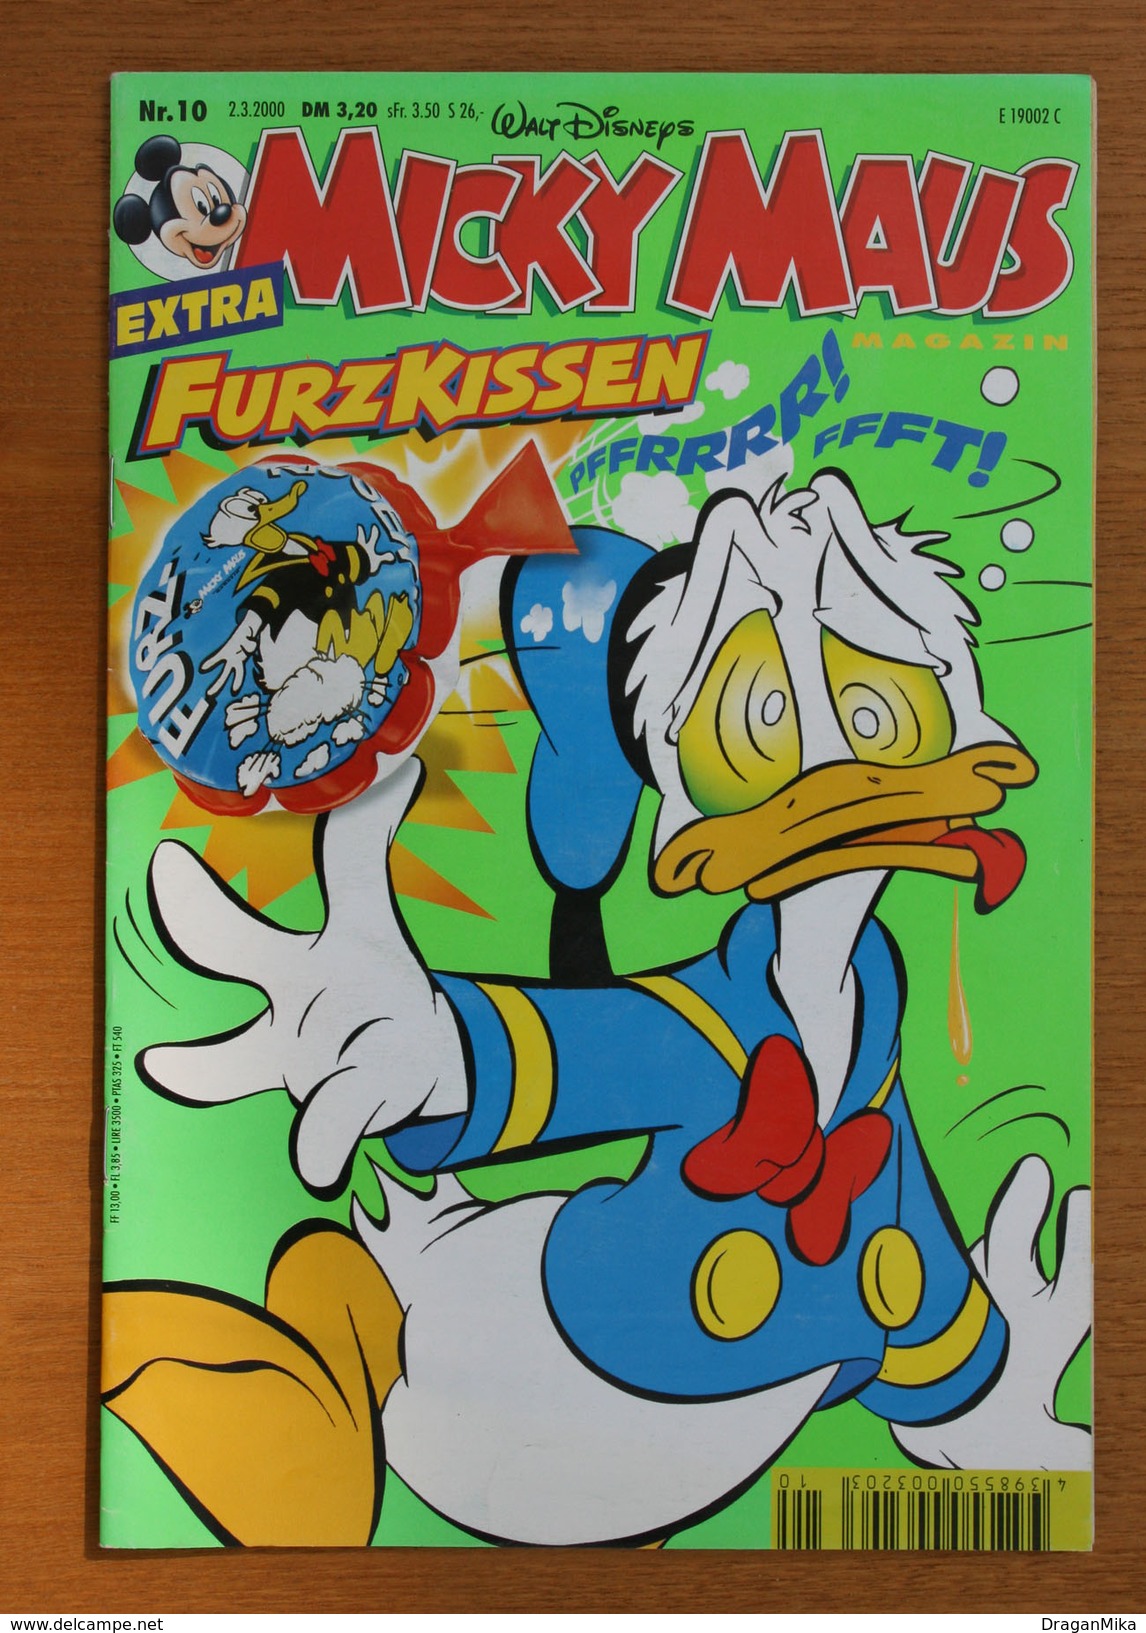 GERMANY - Vintage MICKY MAUS MAGAZINE Nr.10 (2.3.2000) - Toy Furz Kissen, FREE SHIPPING - Walt Disney